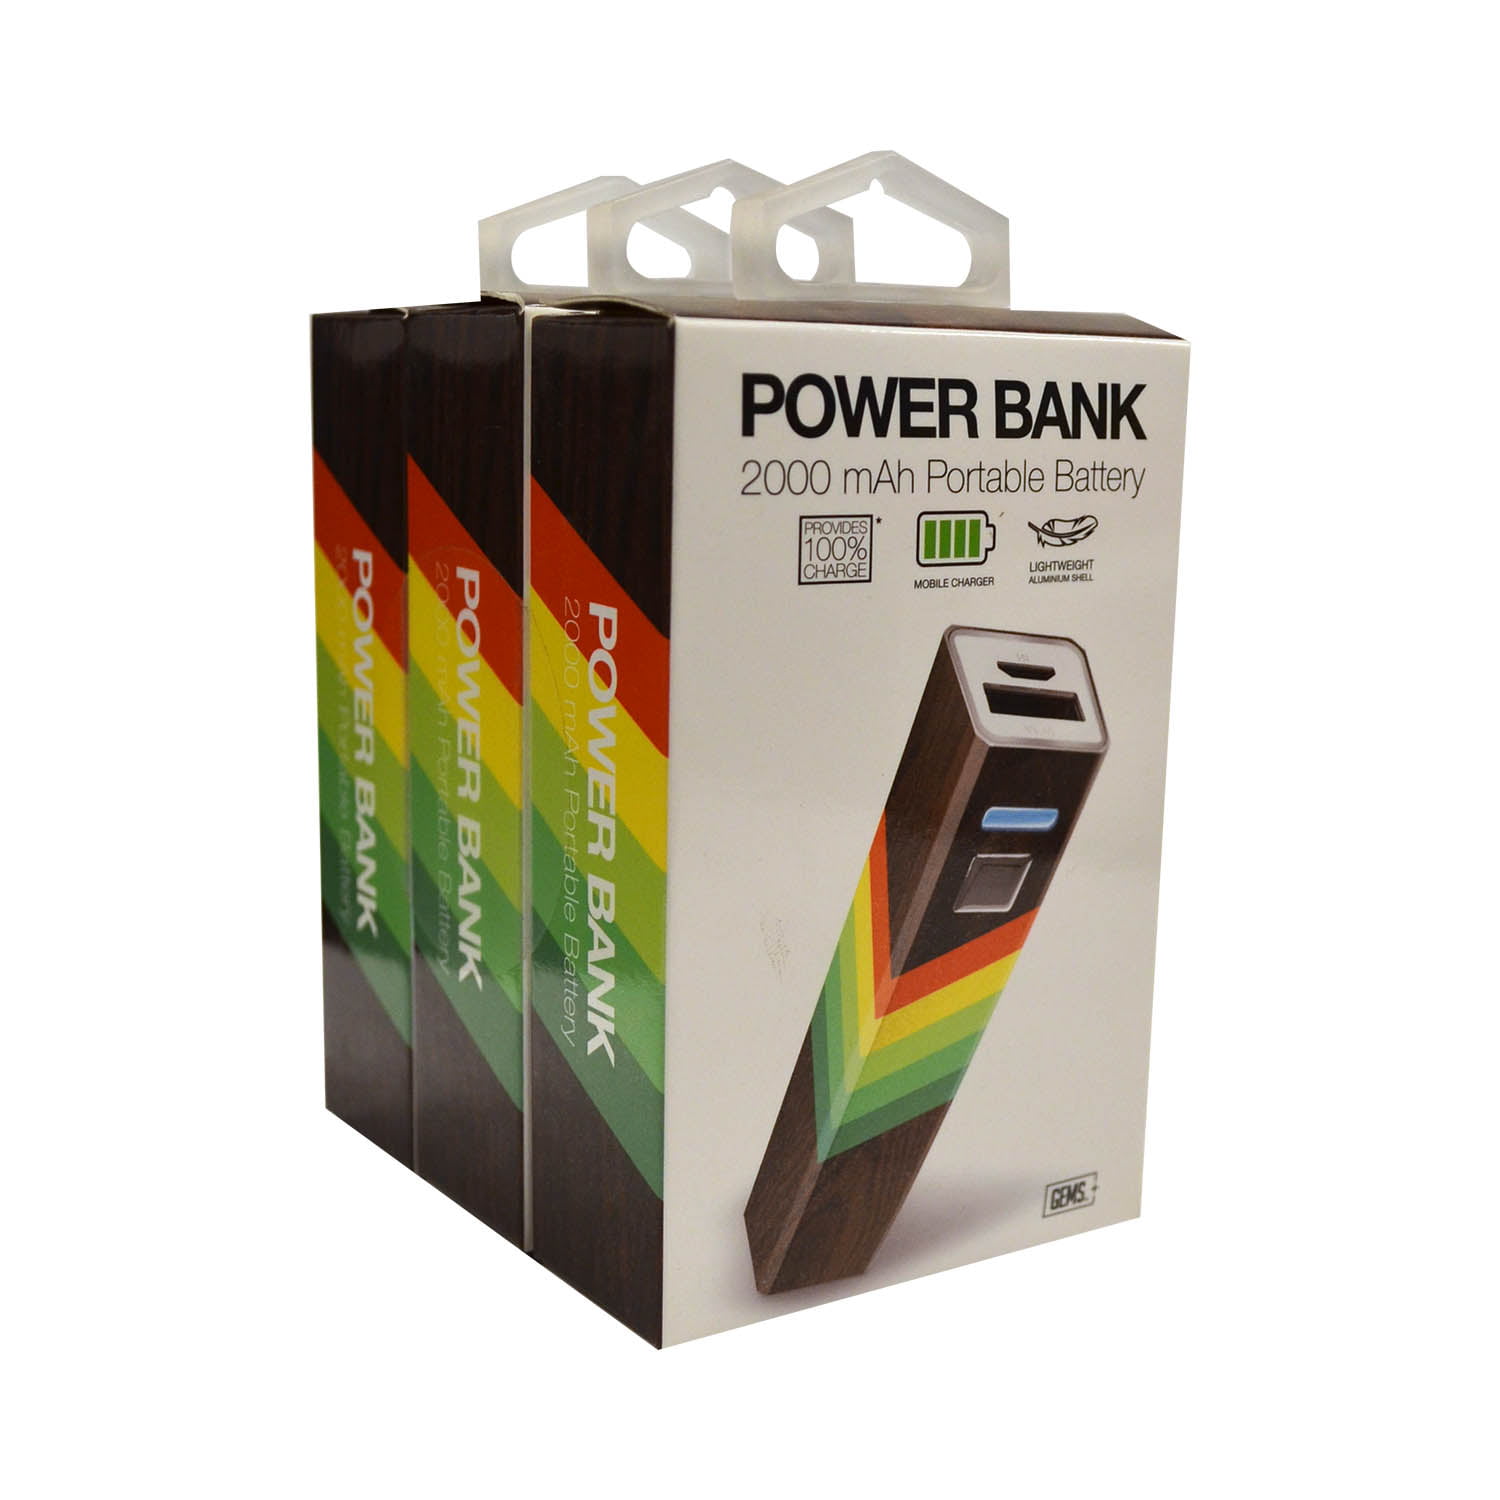 GEMS Power Bank 2000 mAH Portable Battery - 3 Pack, Multicolor Design